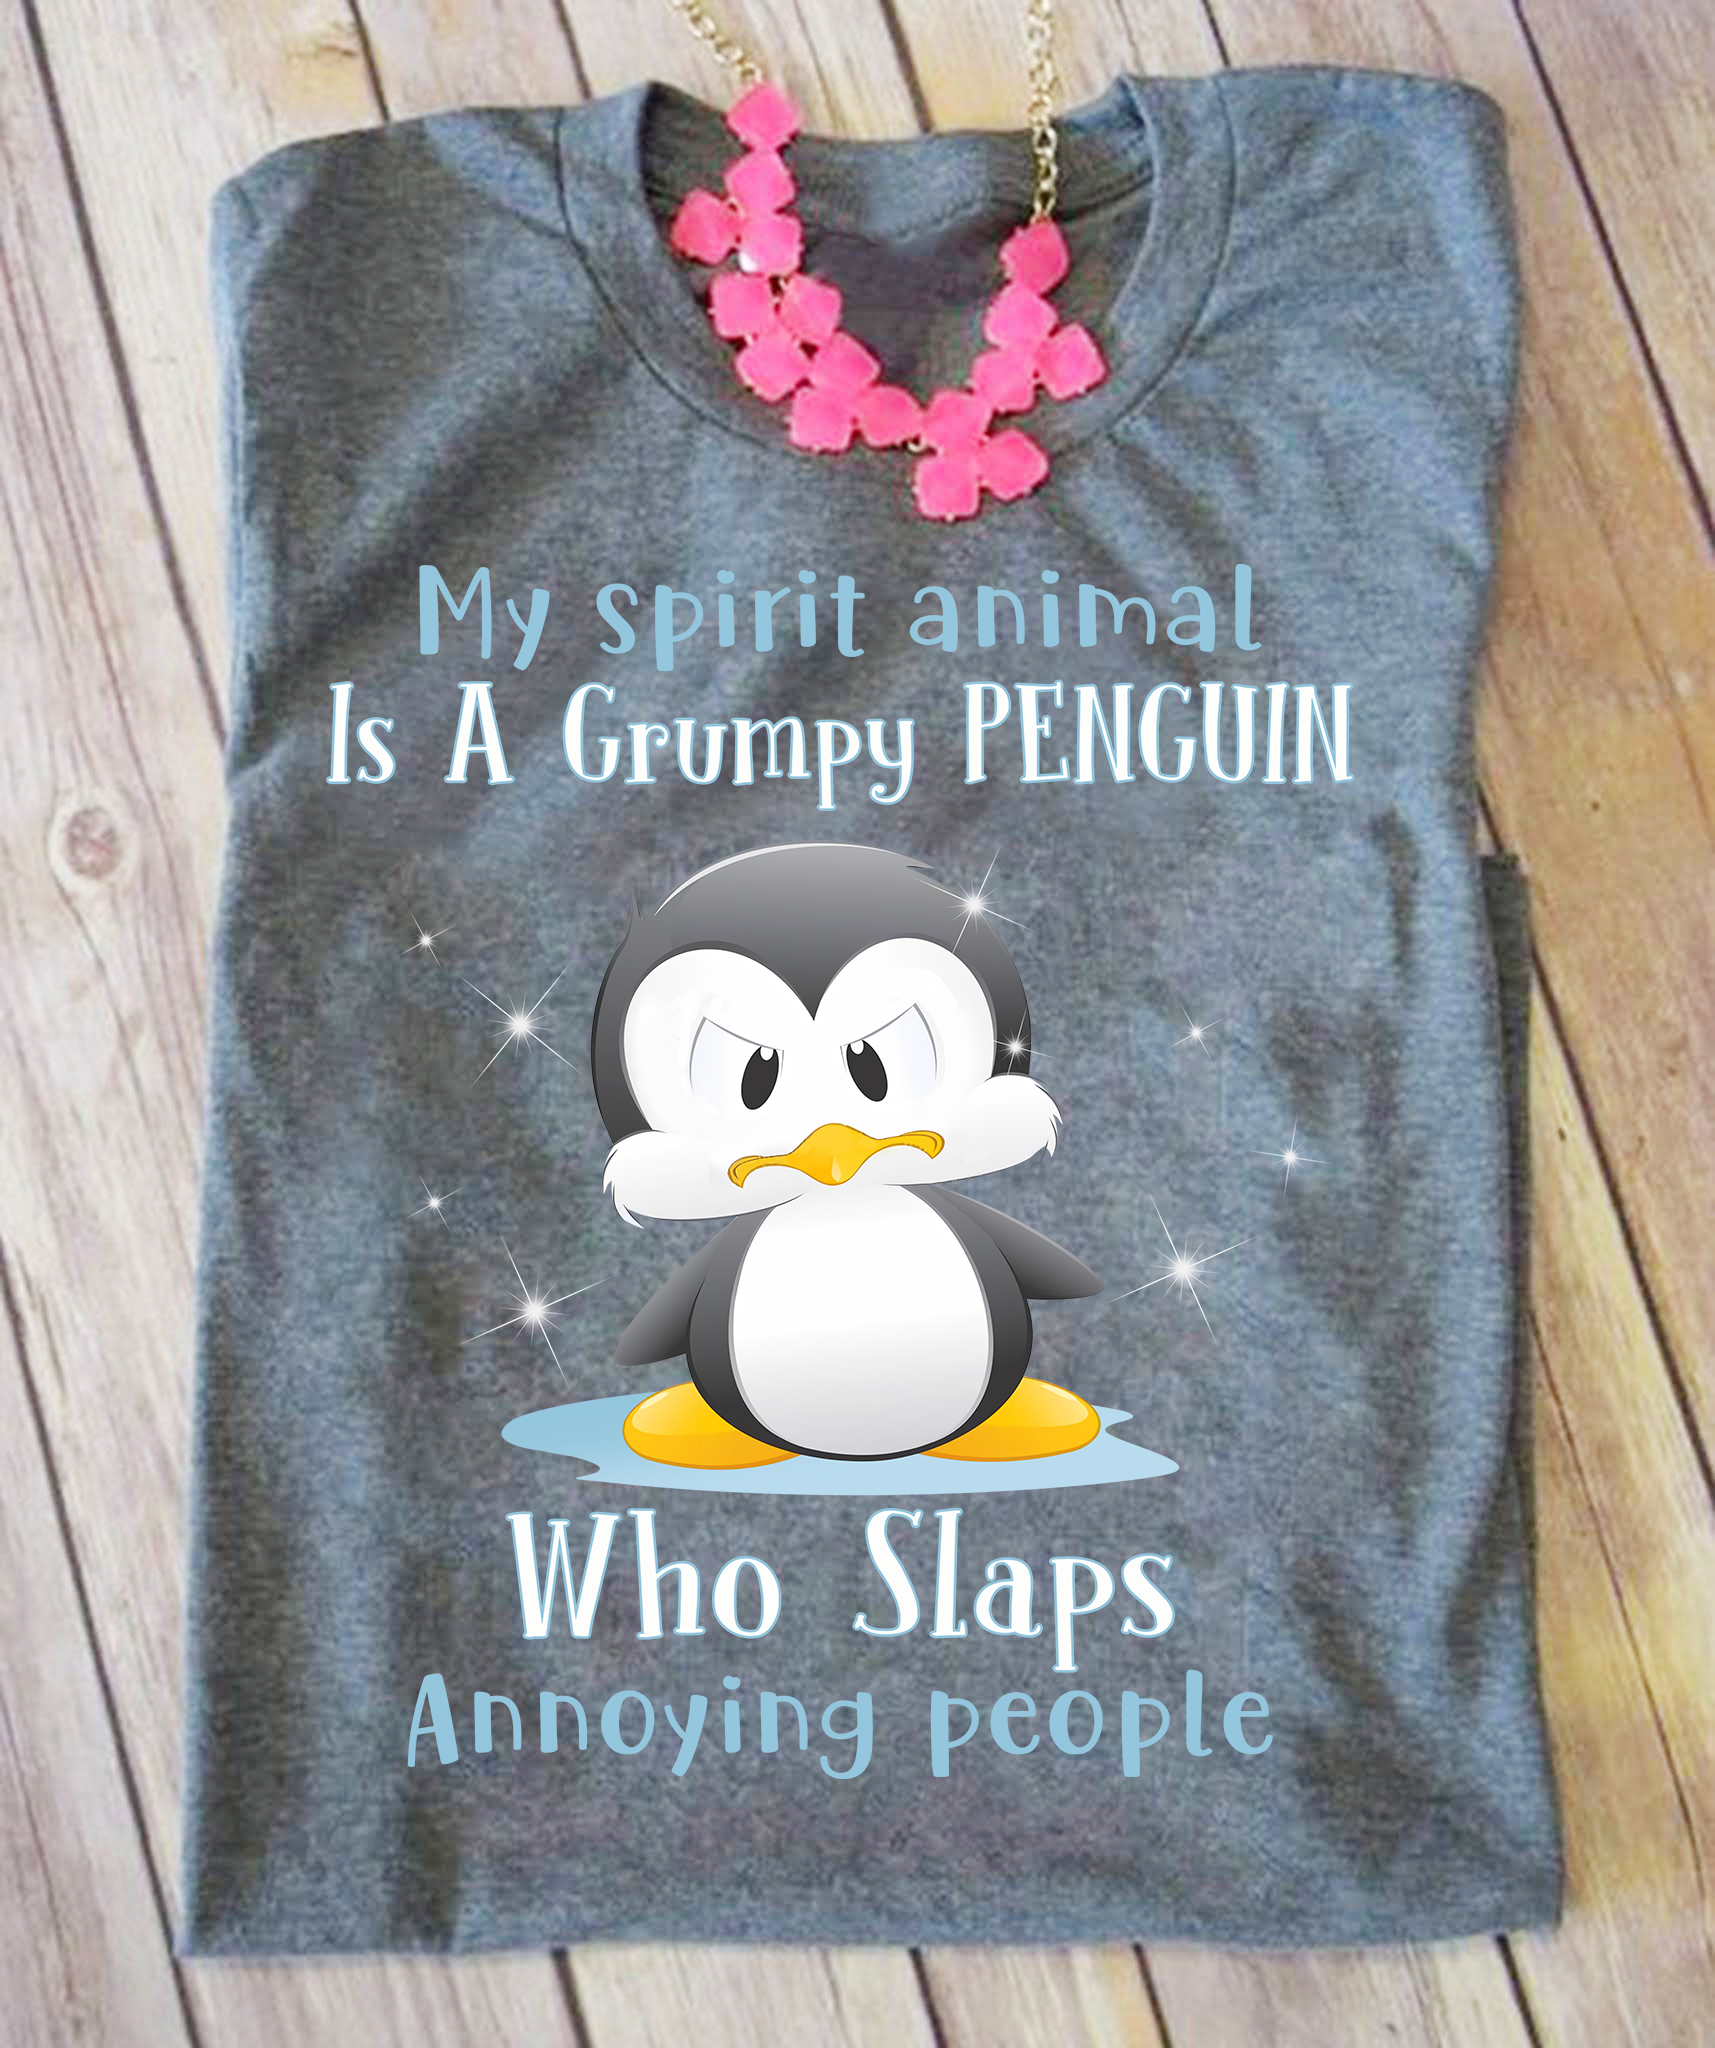 My spirit animal a Grumpy Penguin who slaps annoying people